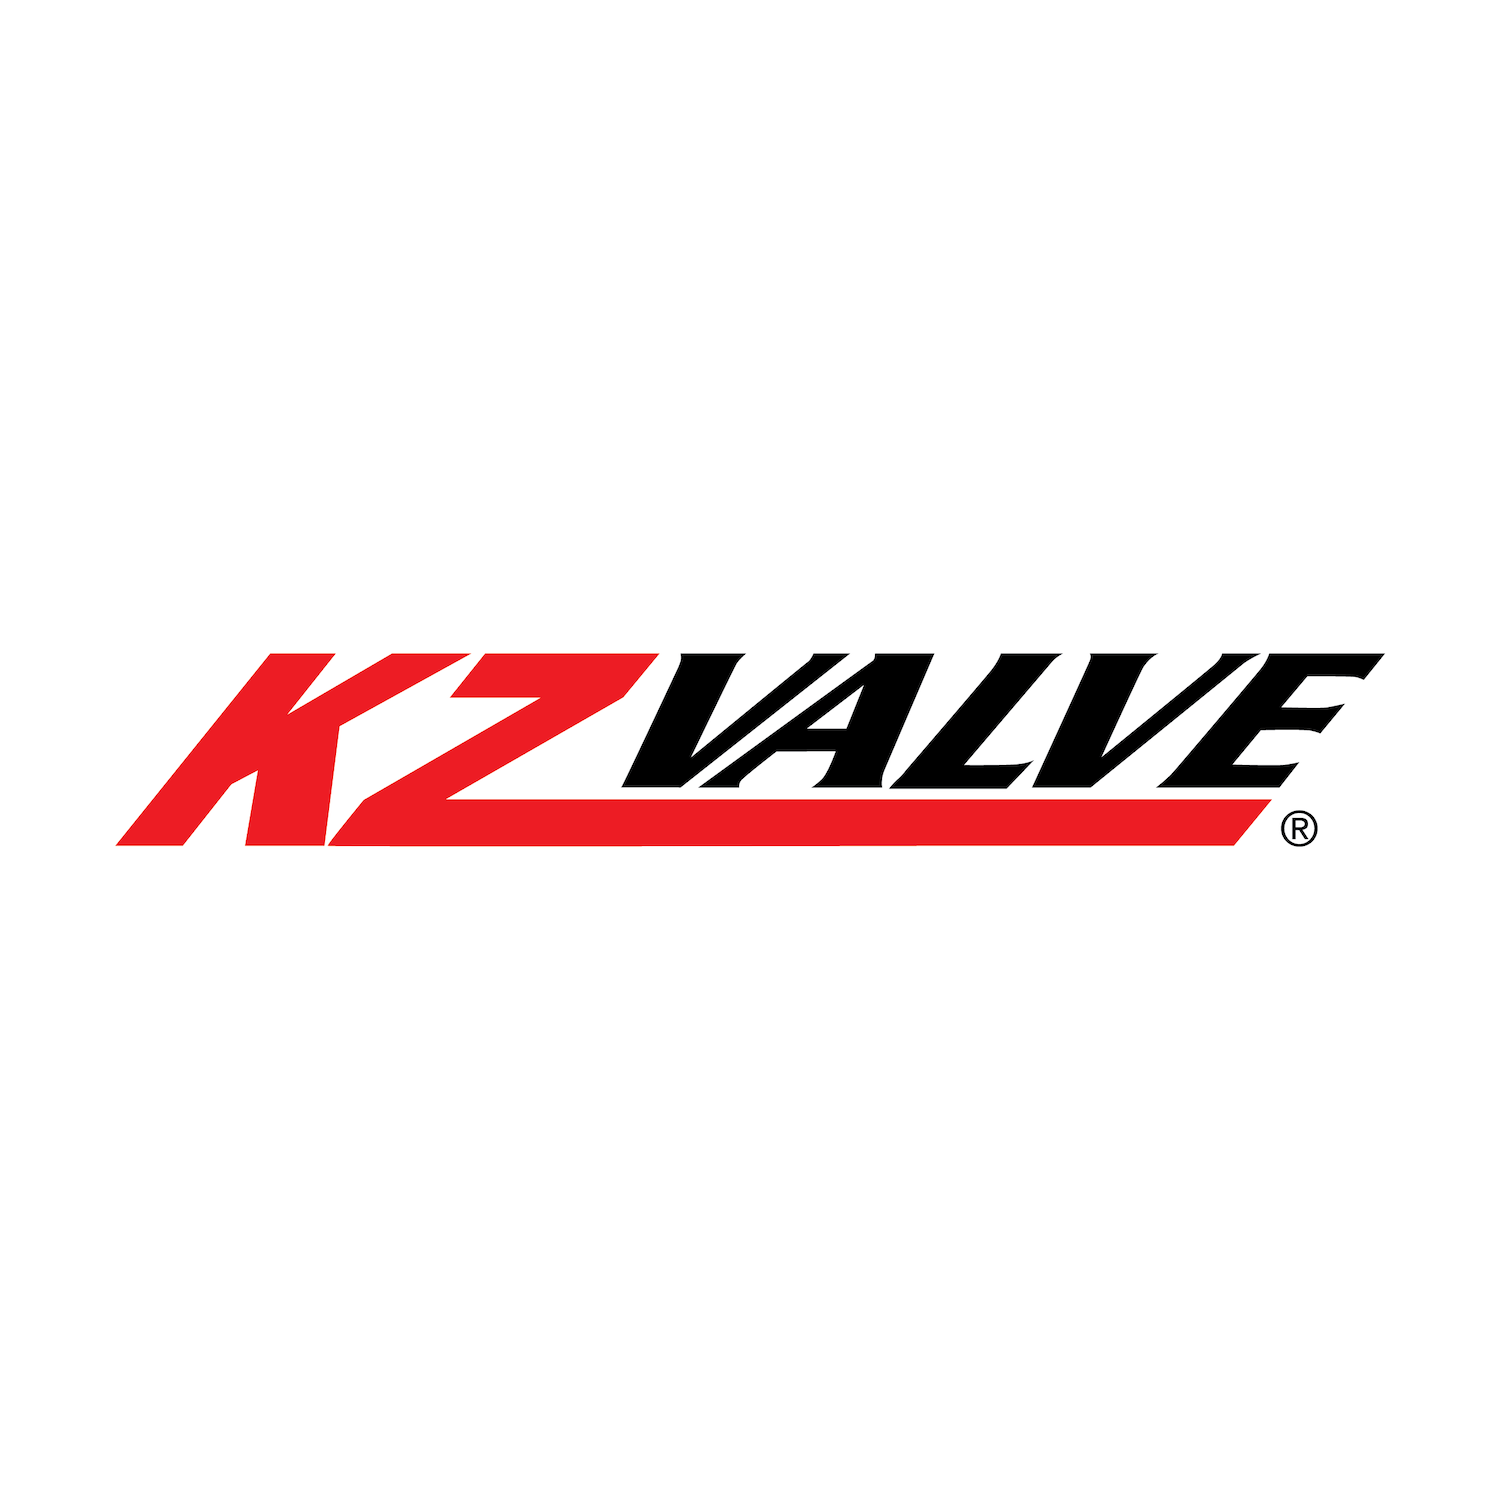 KZValve logo